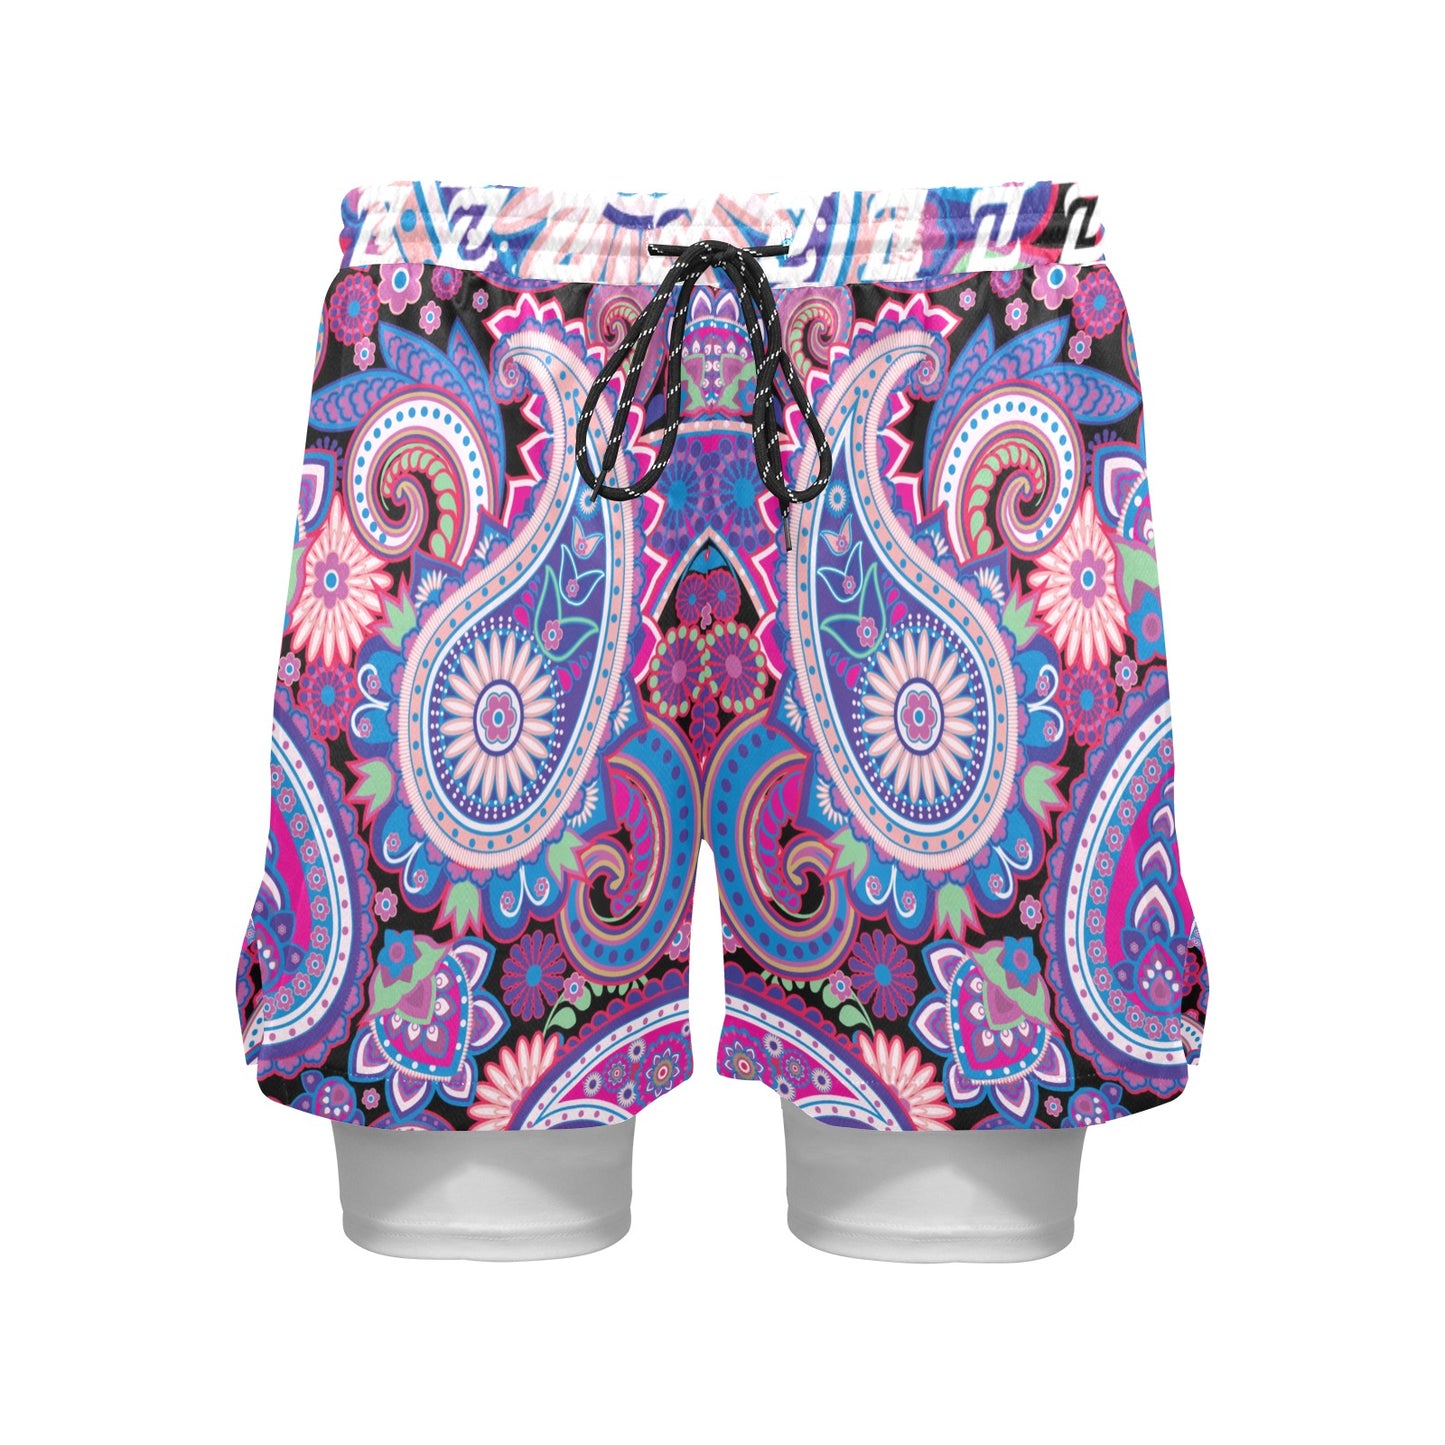 Zen Shorts with Liner - Purple Paisley